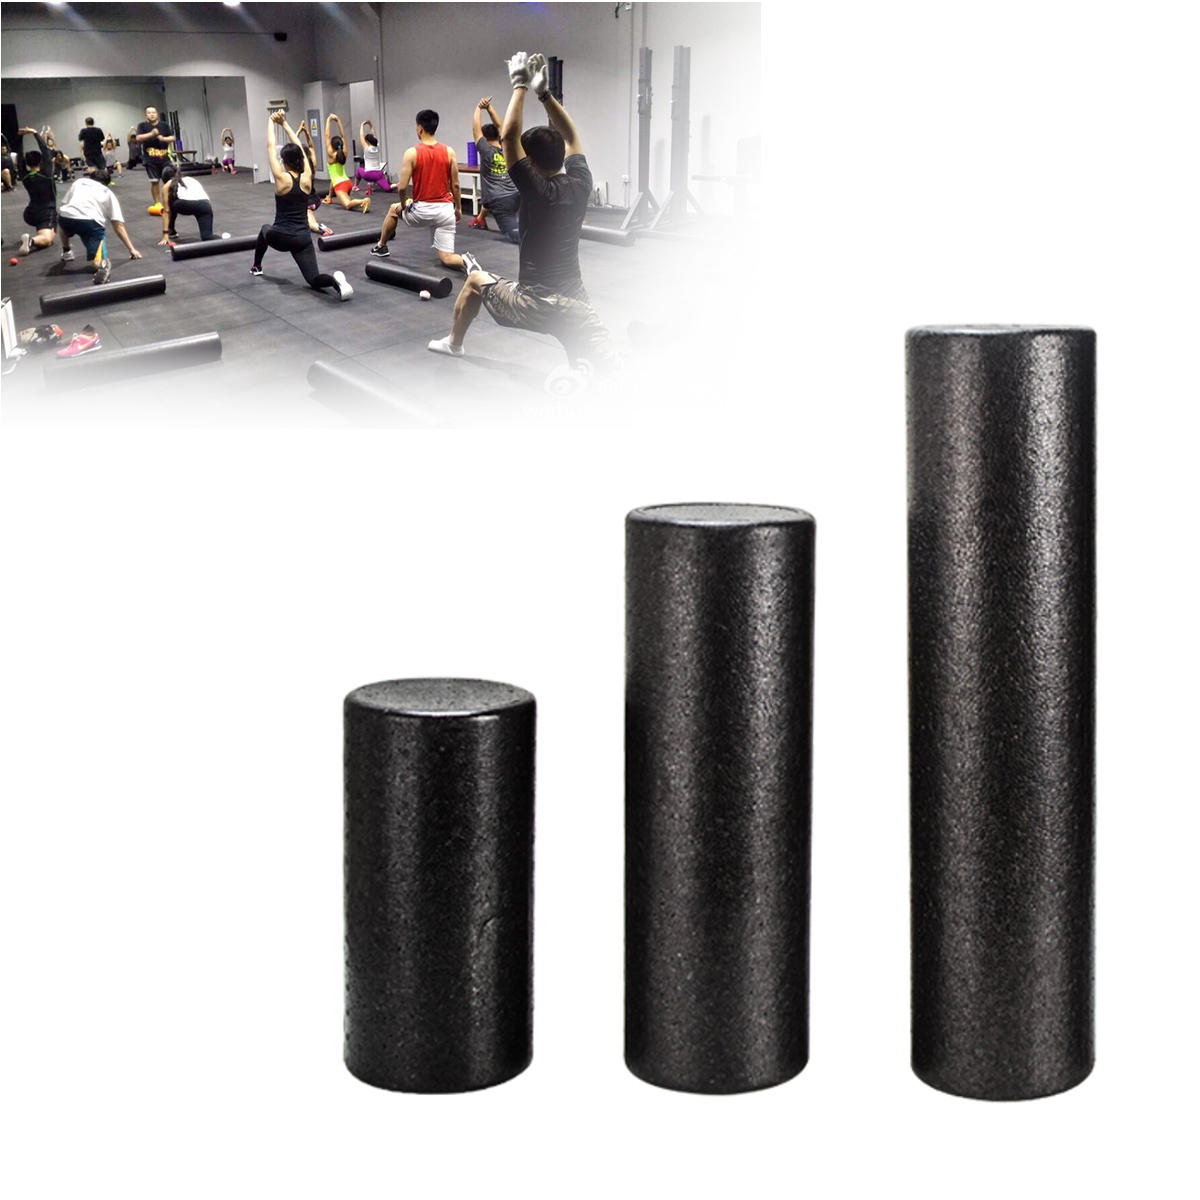 30/45/60CM EPP Yoga Foam Column Roller Sport Fitness Gym Exercise Tools Massage Pilates